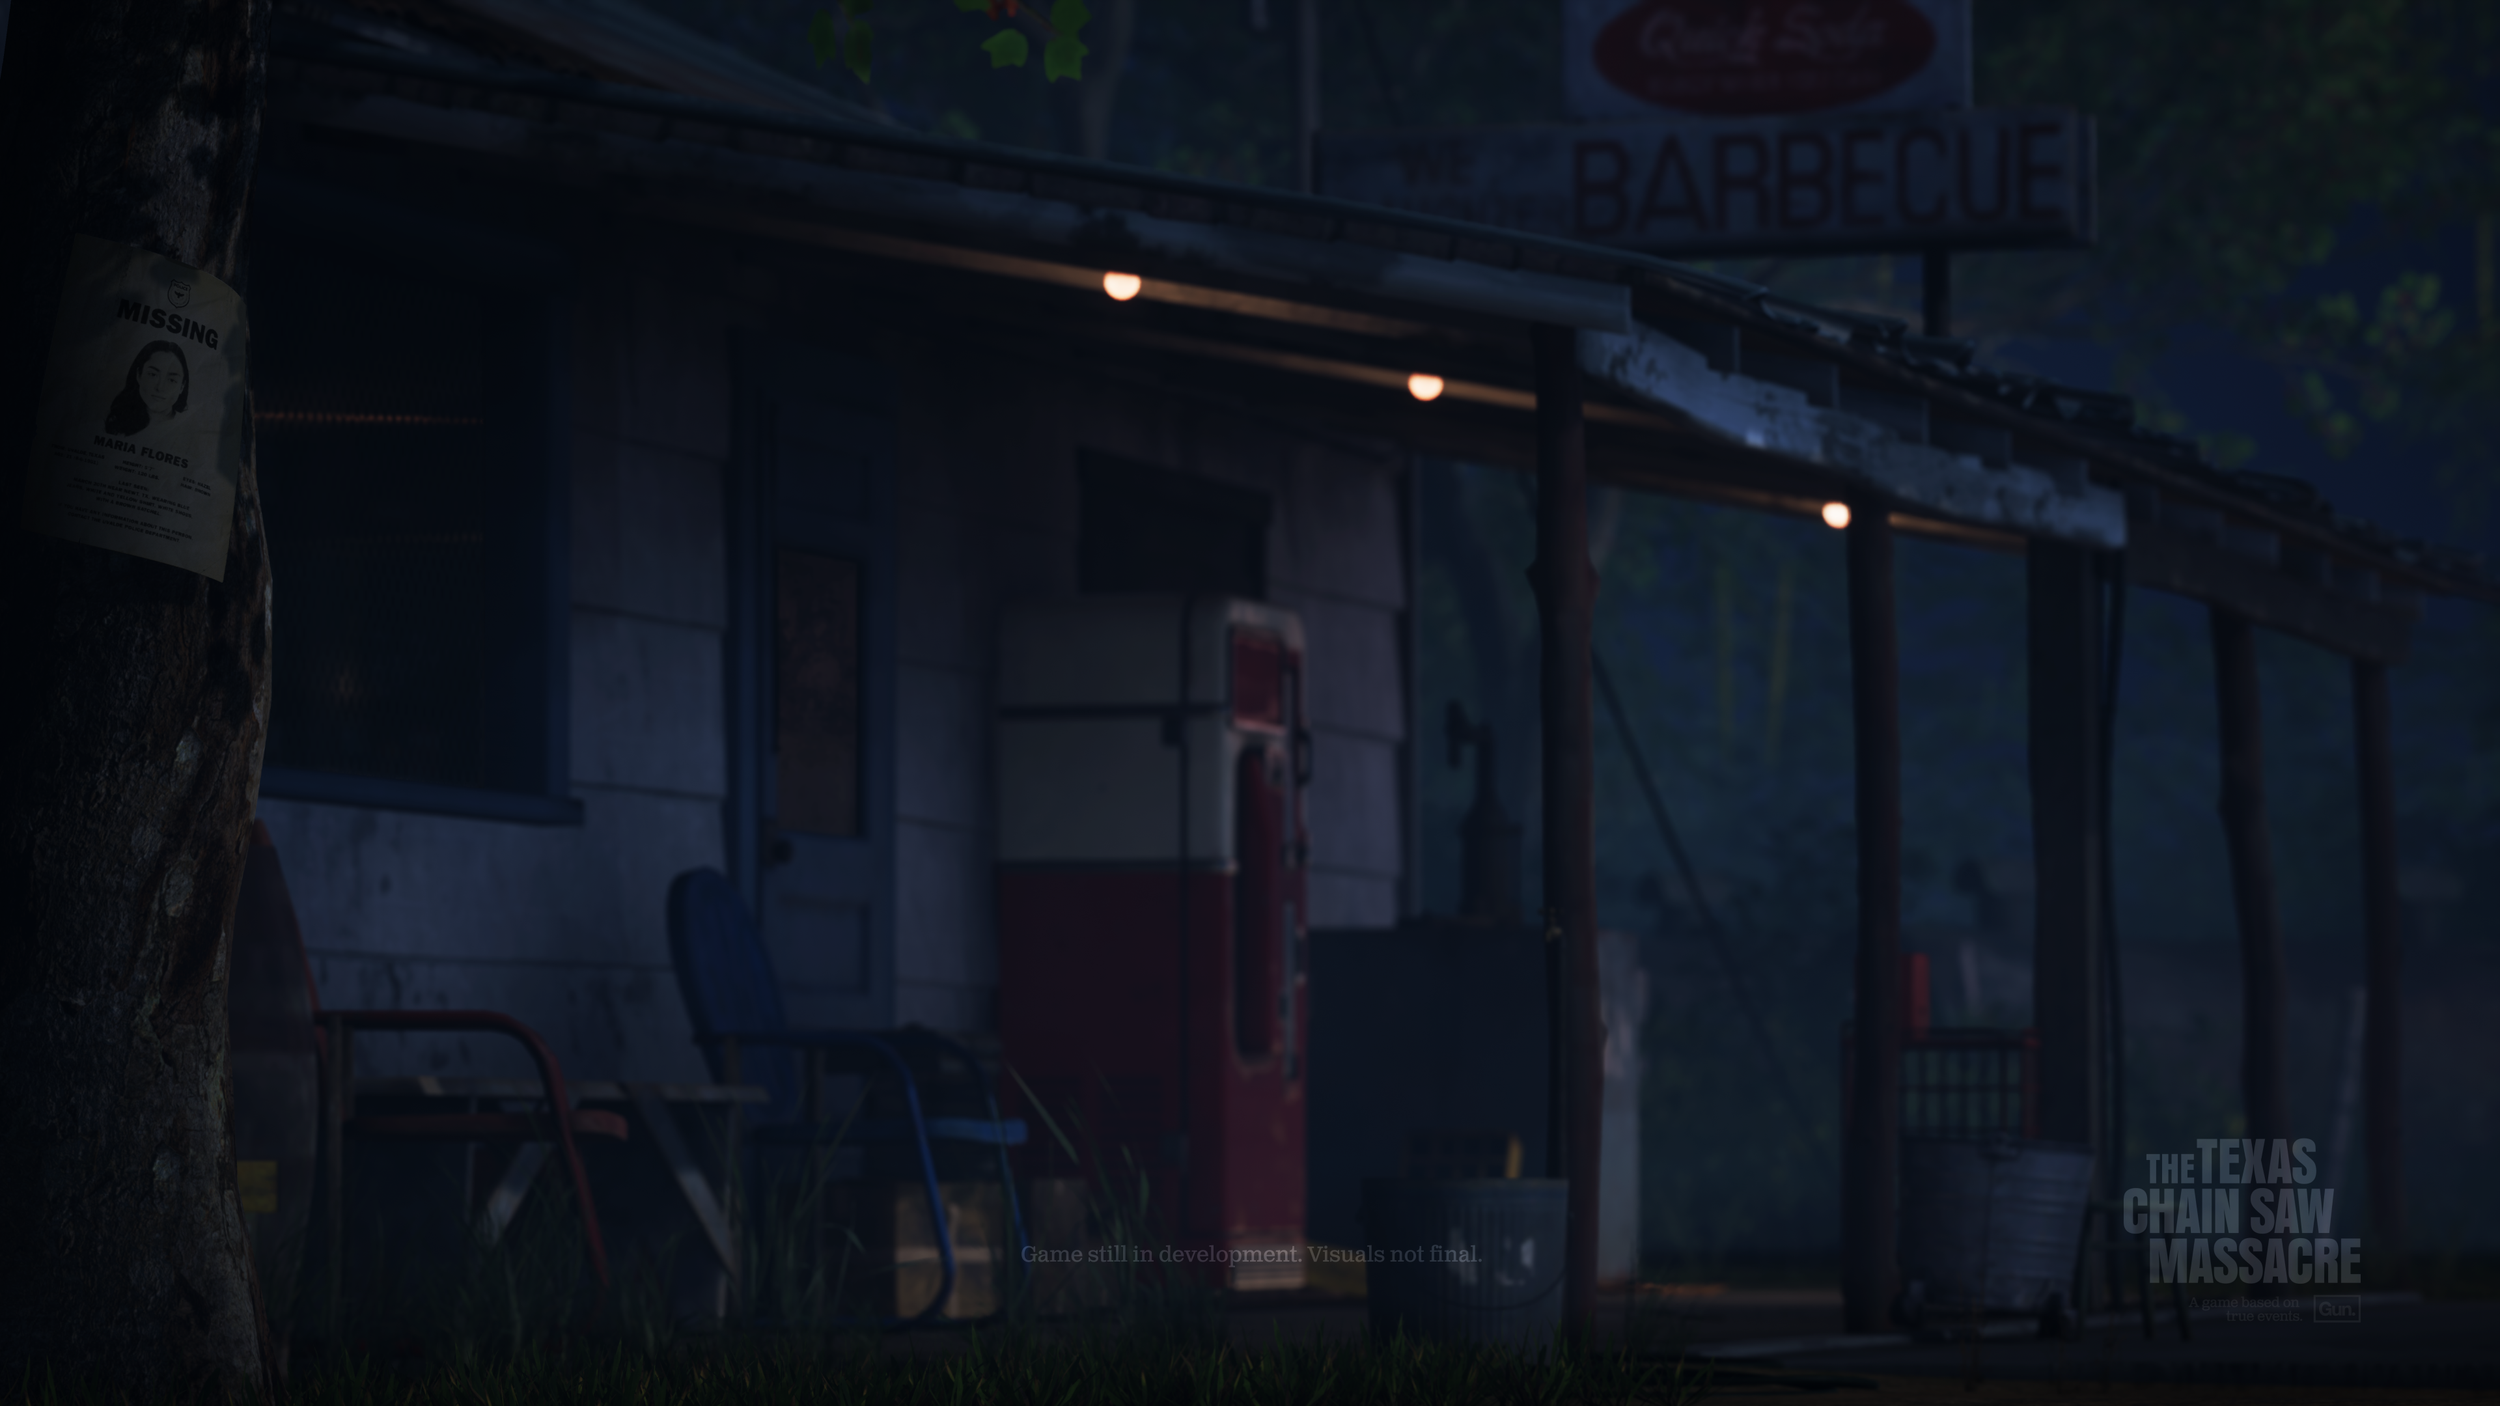 The Texas Chain Saw Massacre - PS4 - Compra jogos online na